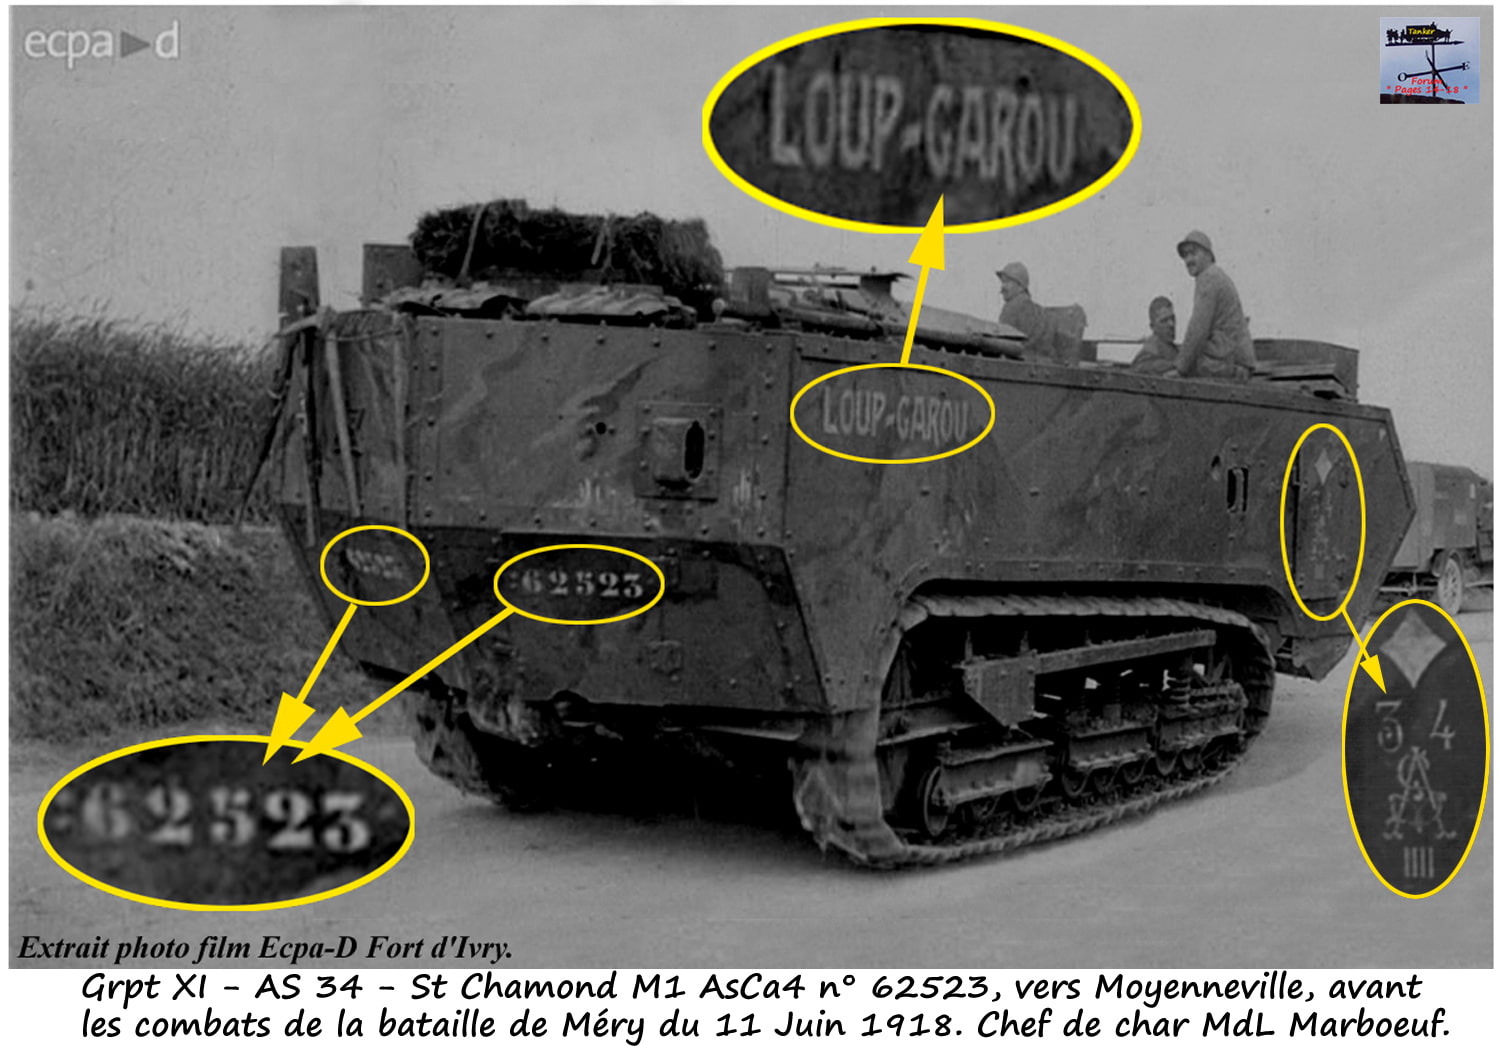 Grpt XI - AS 34 - St Chamond M1 AsCa4 n° 62523 - Loup-Garou (02)-min.jpg